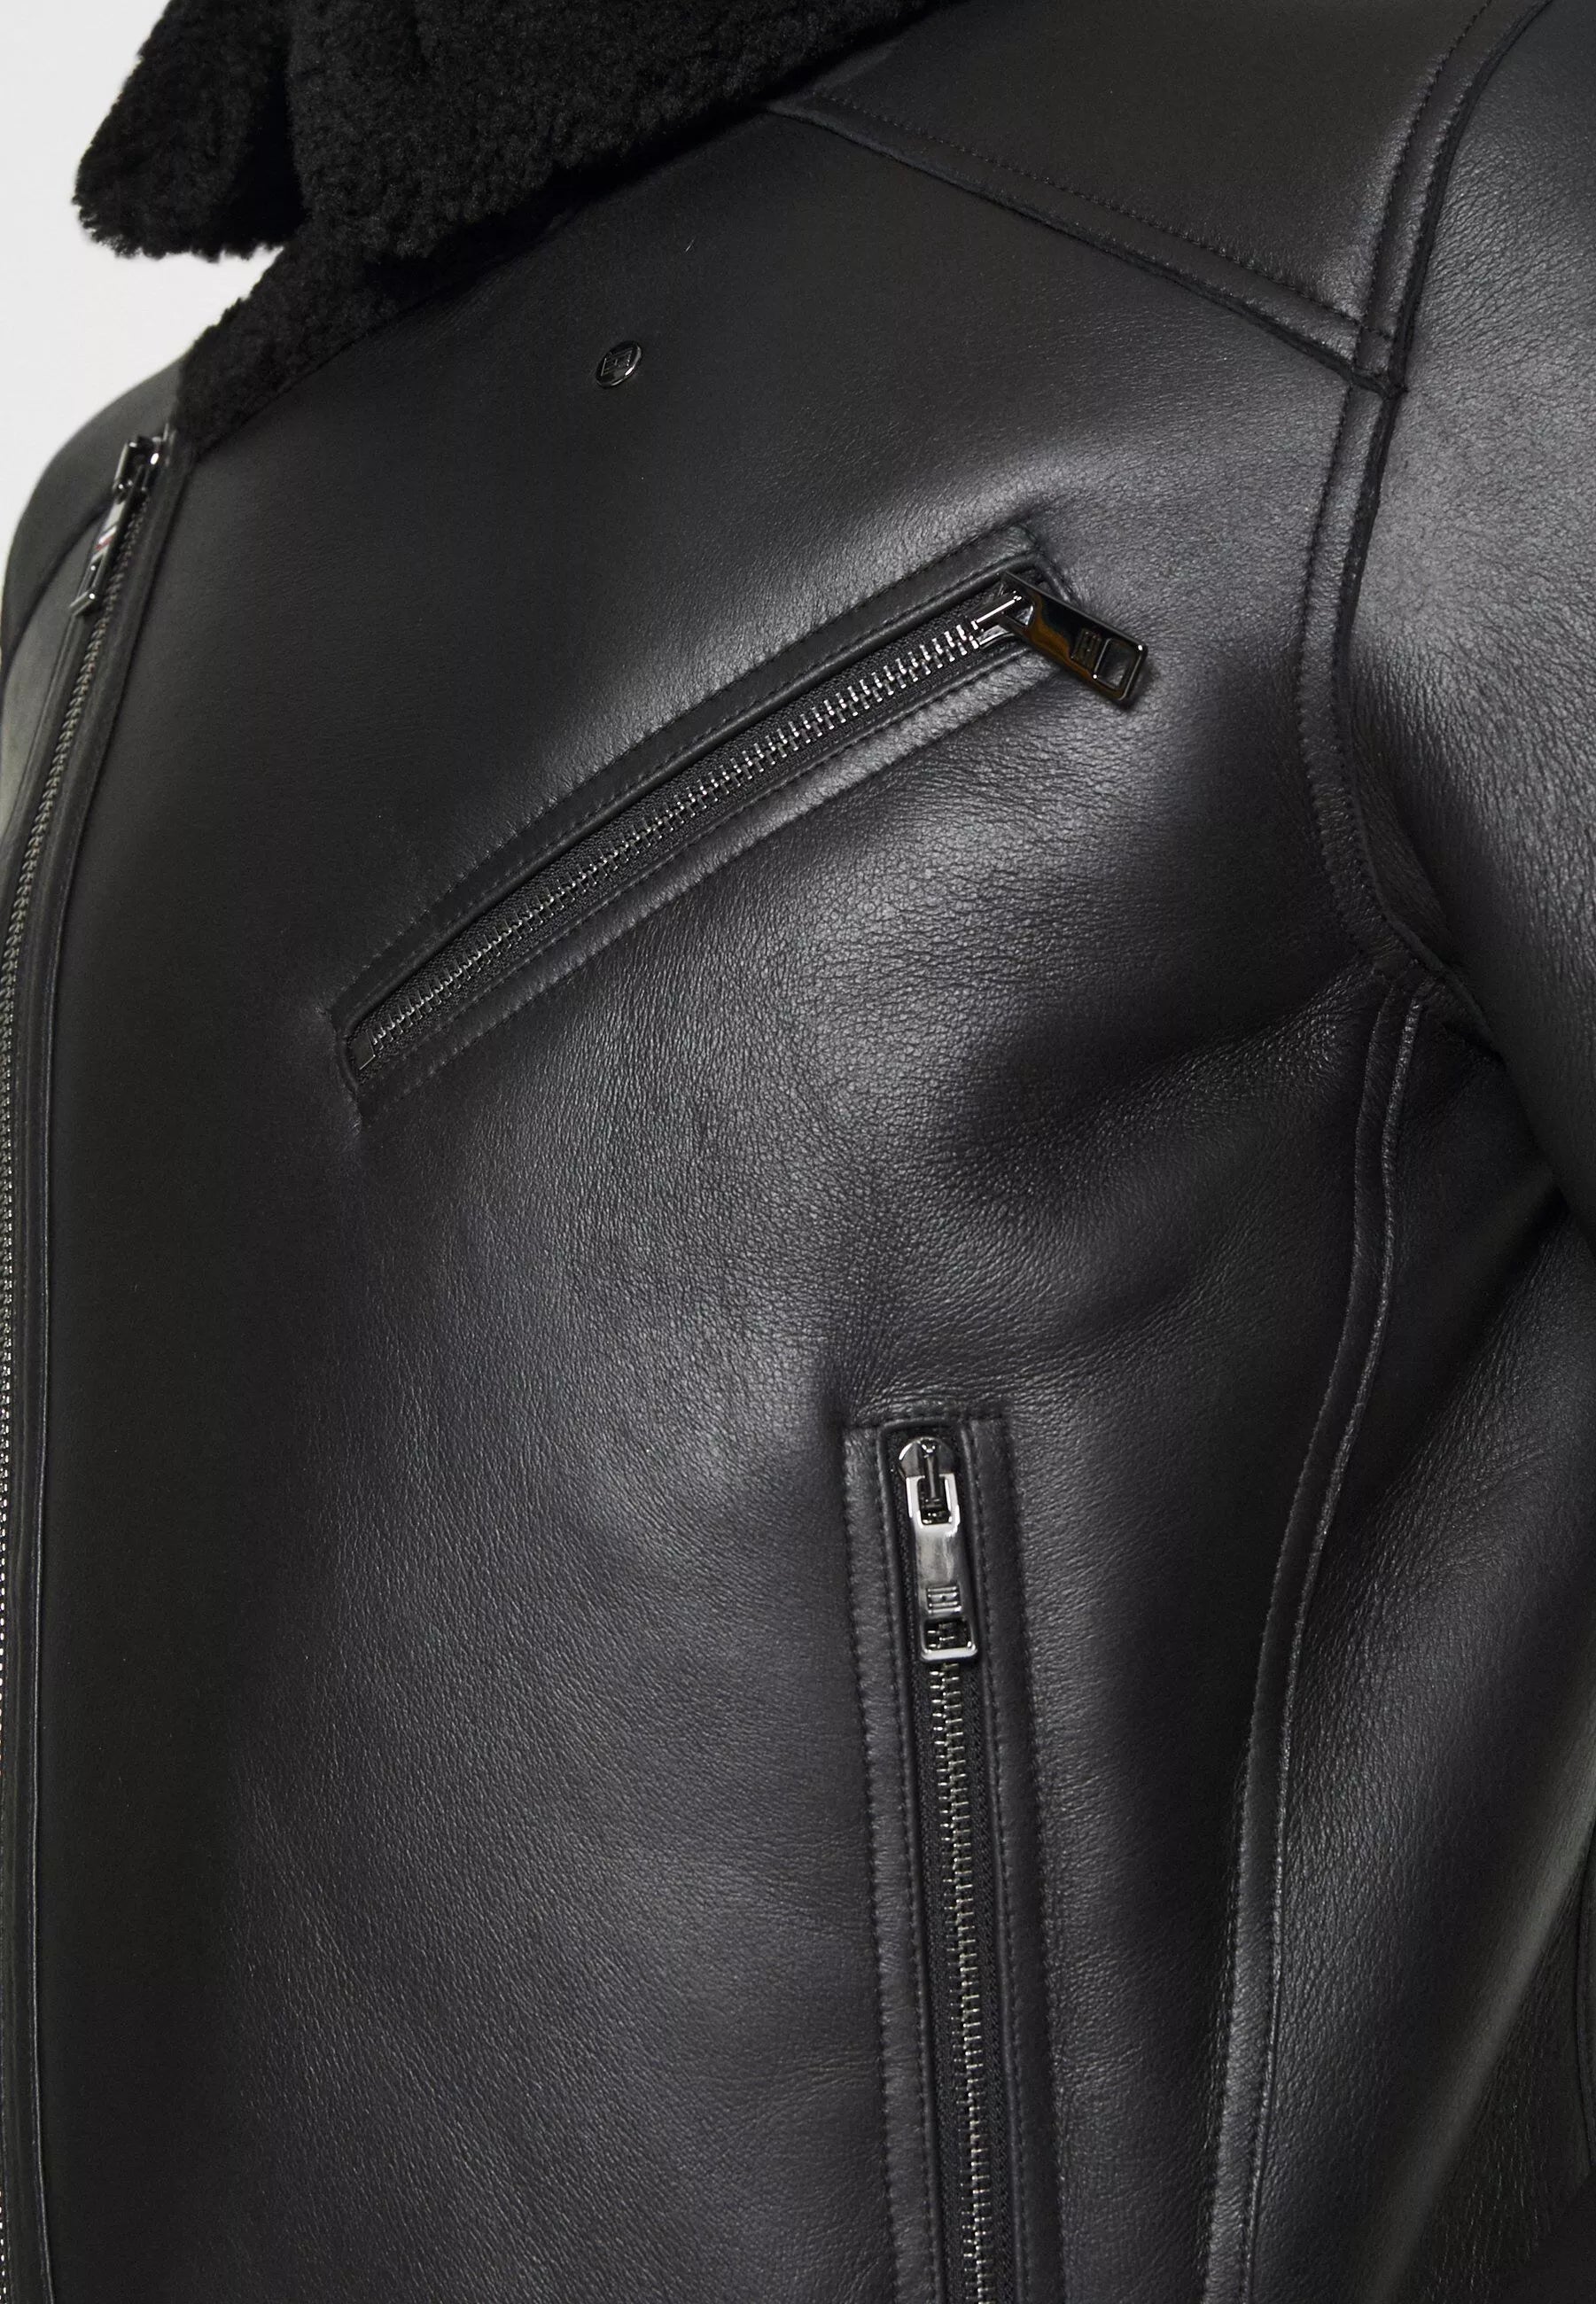 Men’s B3 Aviator Black Leather Shearling Jacket